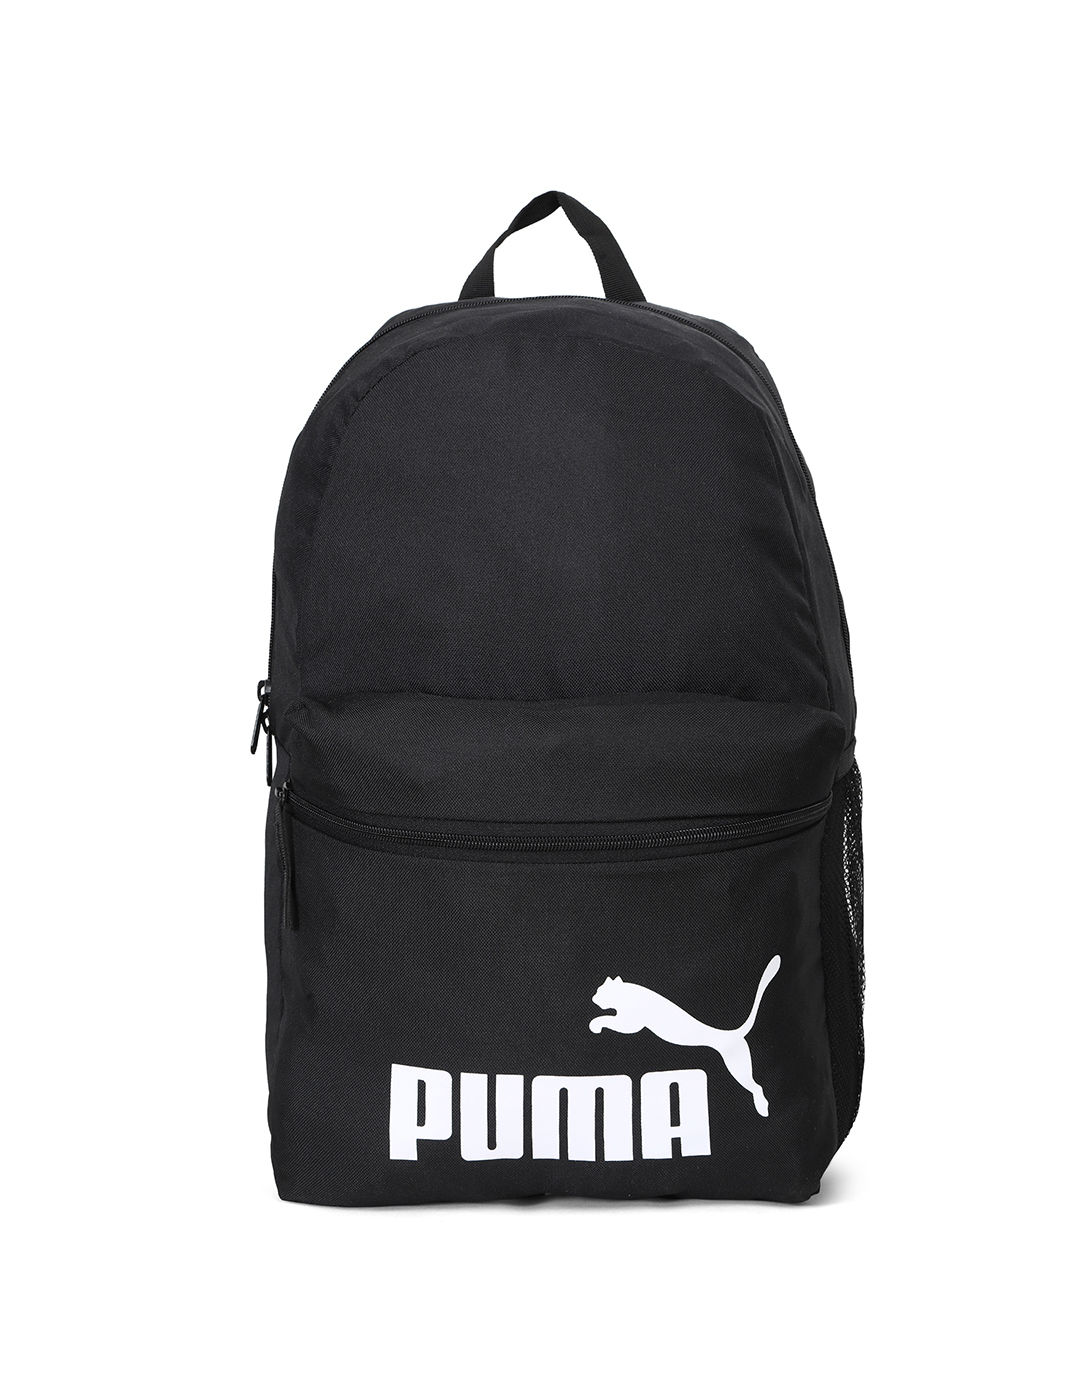 puma backpack price